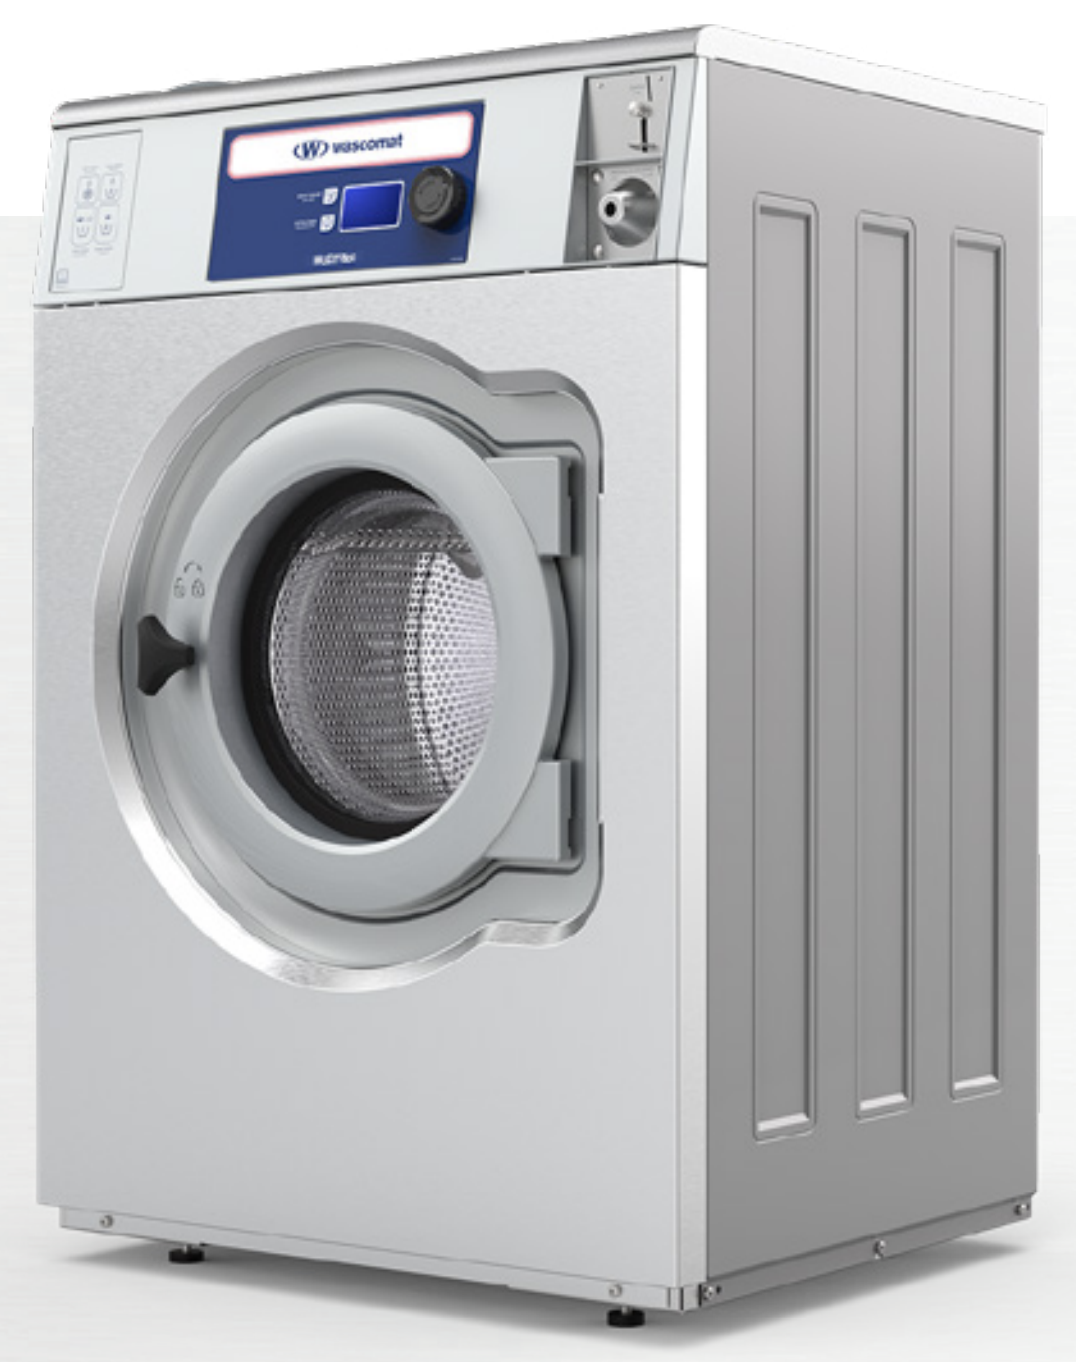 New 2022 Wascomat Wud745 - Cardinal Laundry Equipment Co